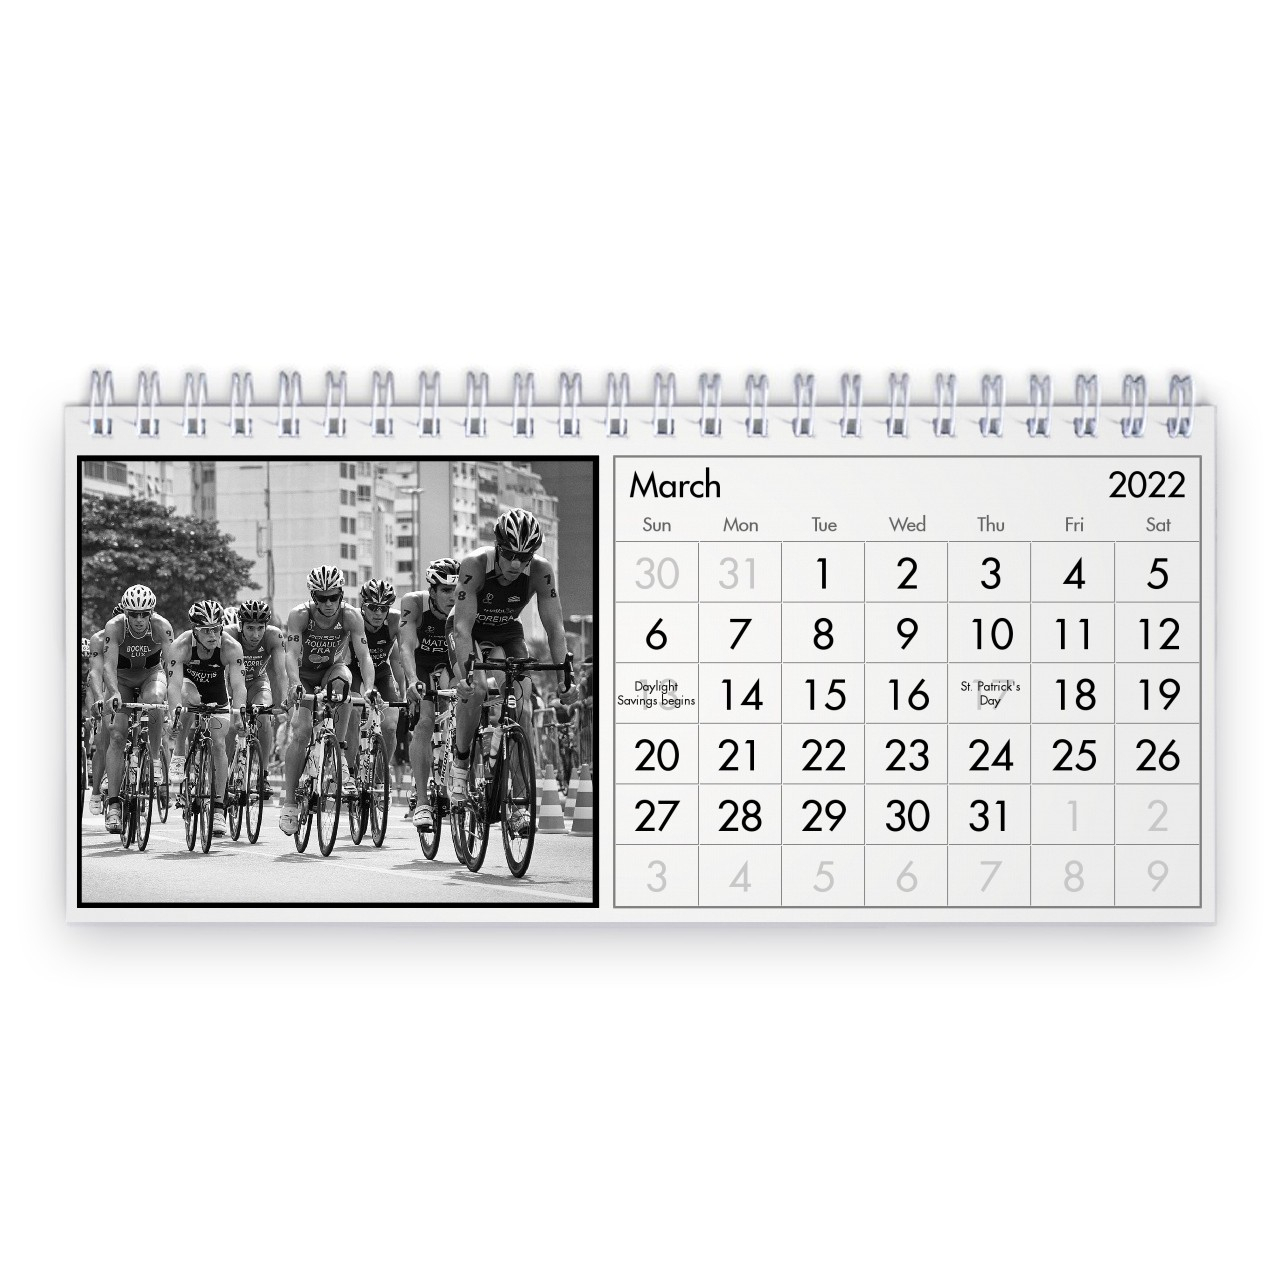 Triathlon Calendar 2022 February